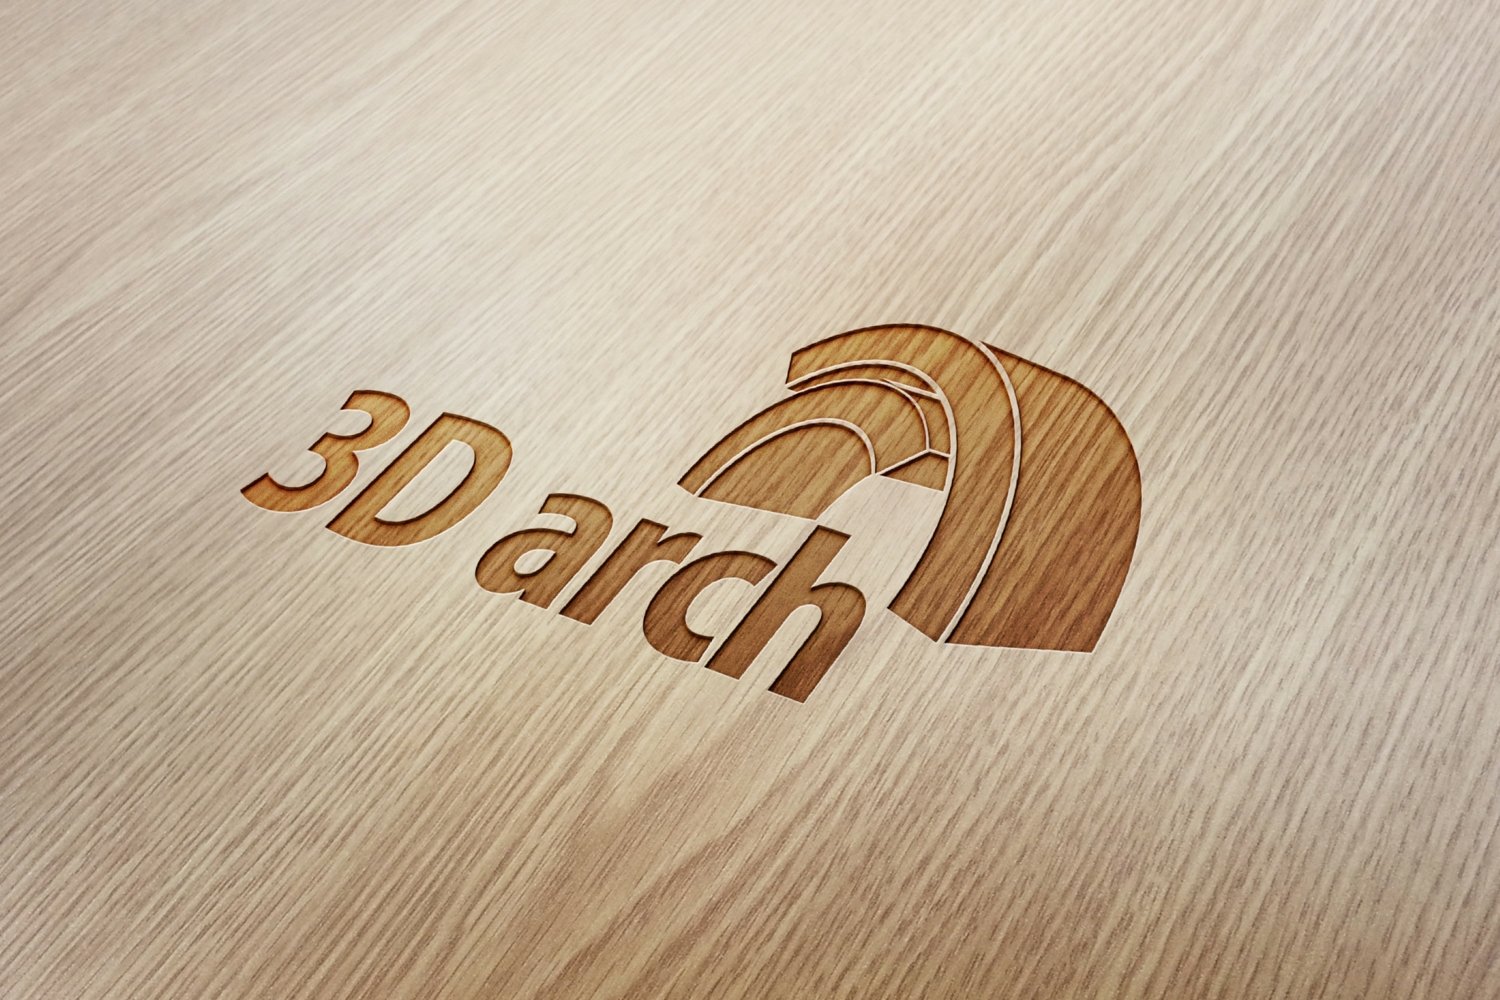 3D Arch wood engraved logo mockup.